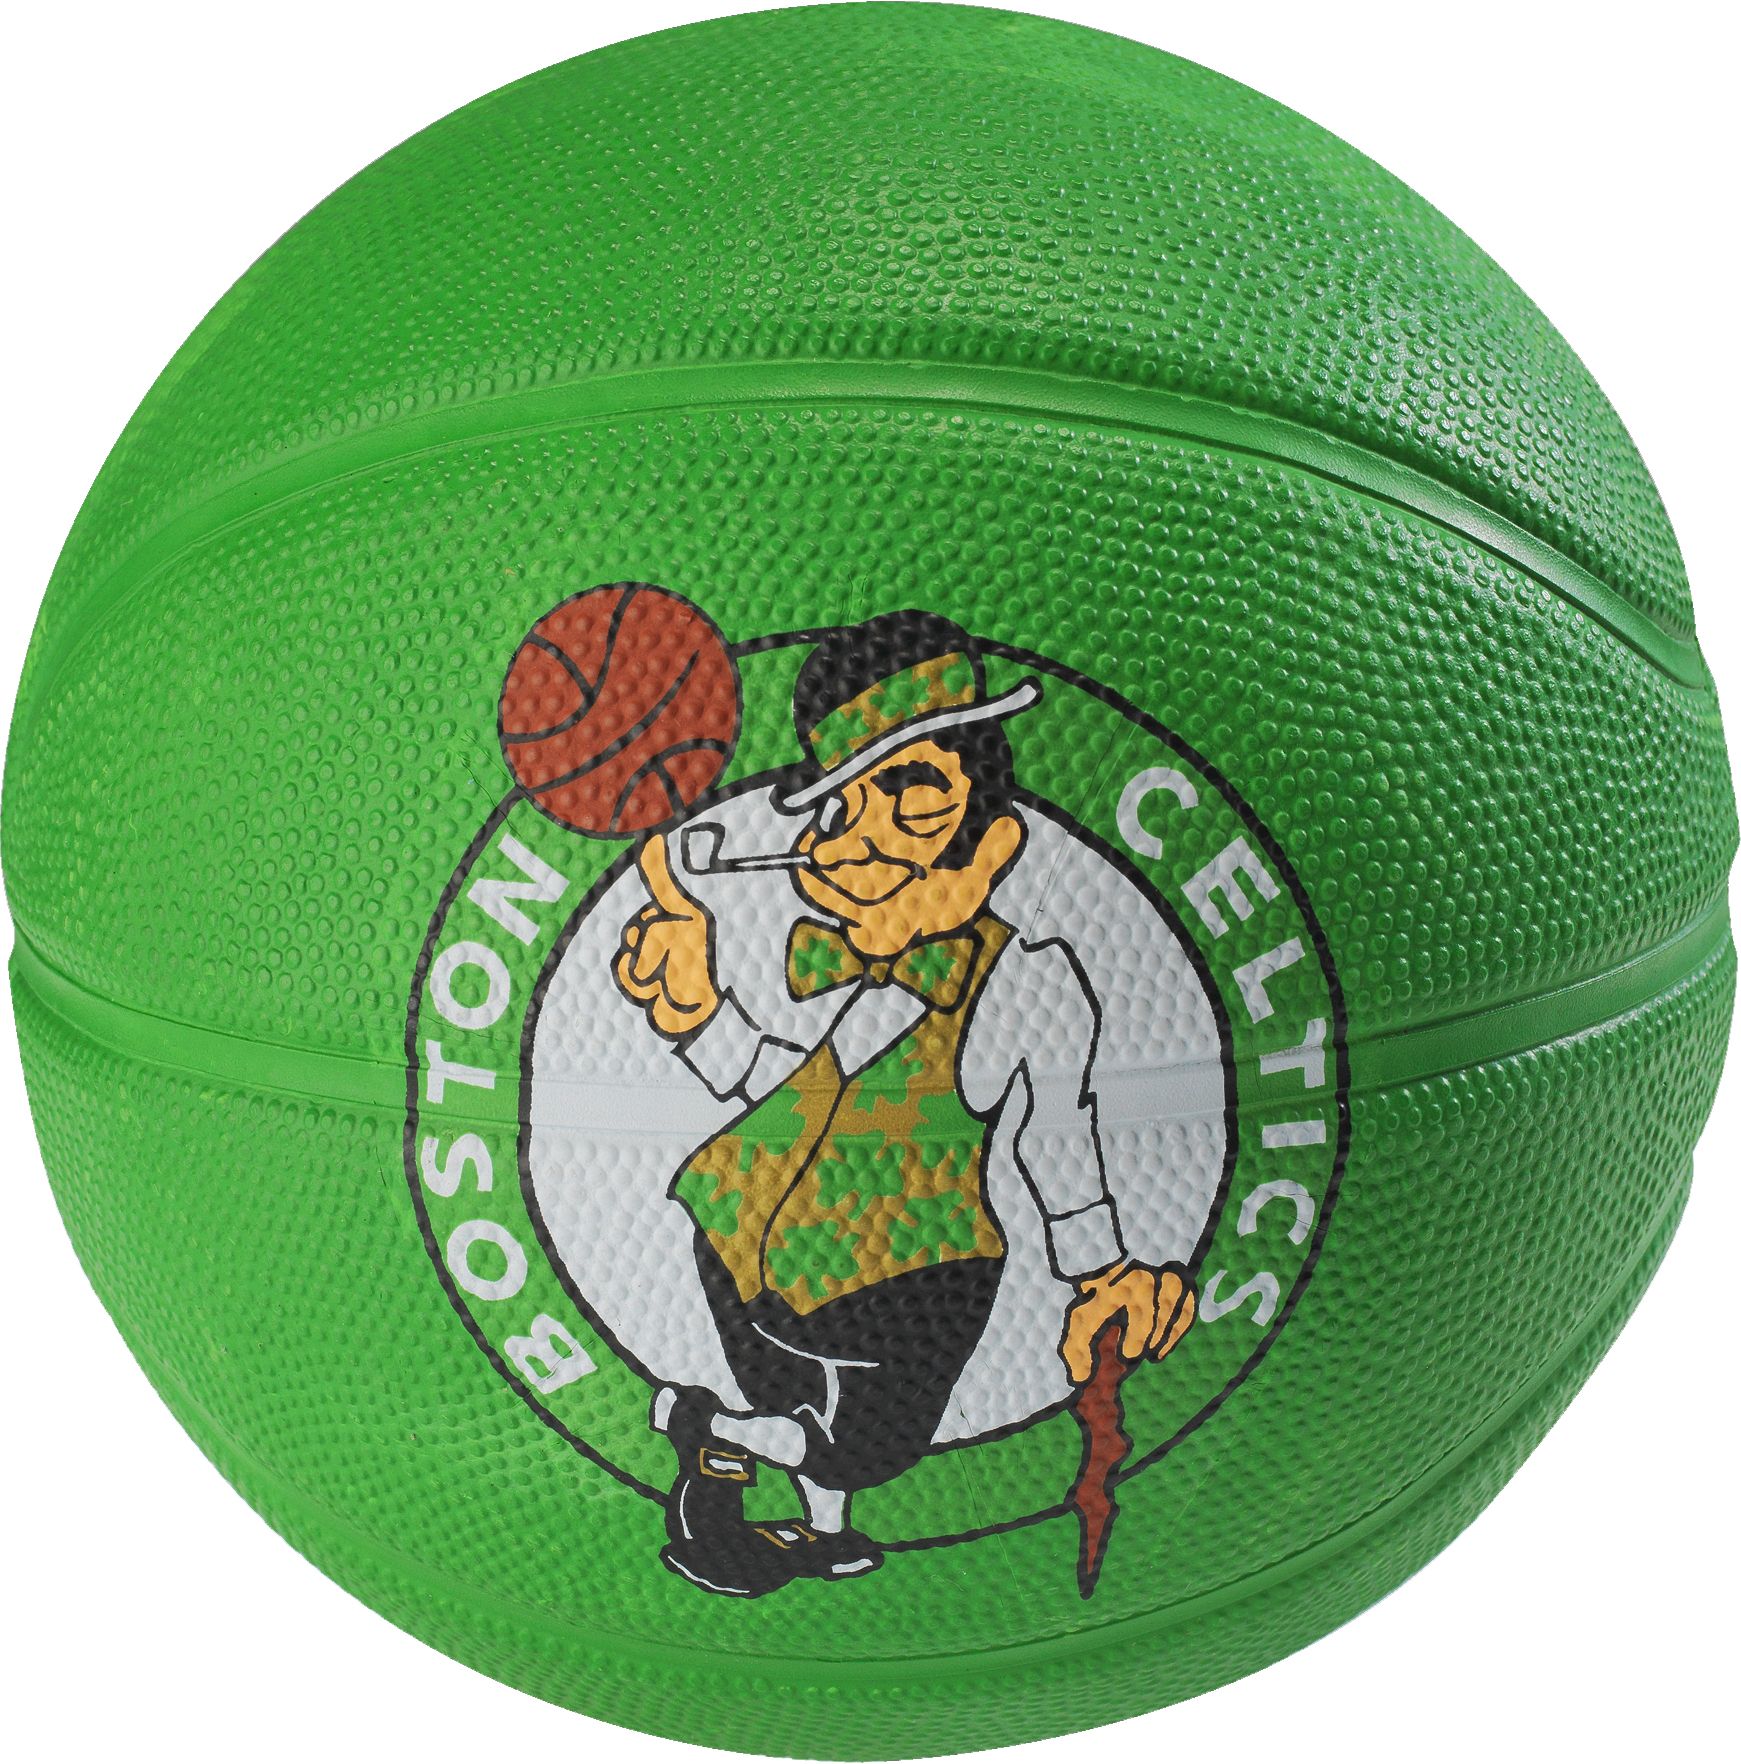 boston celtics mini basketball